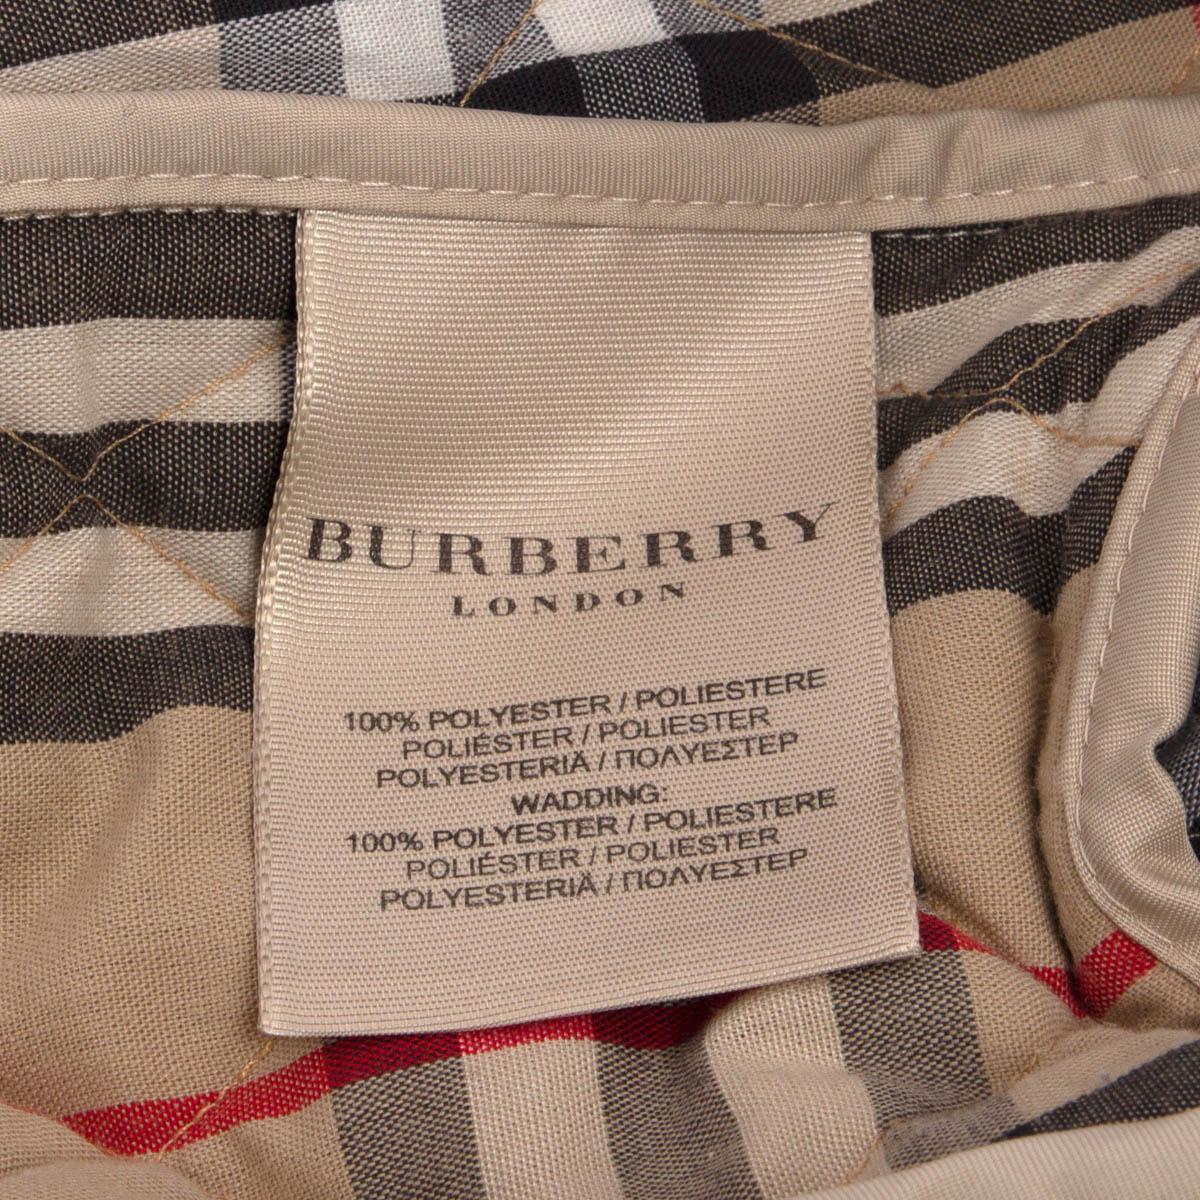 Burberry London Beige Polyester Windbreaker Hoodie Jacket S 